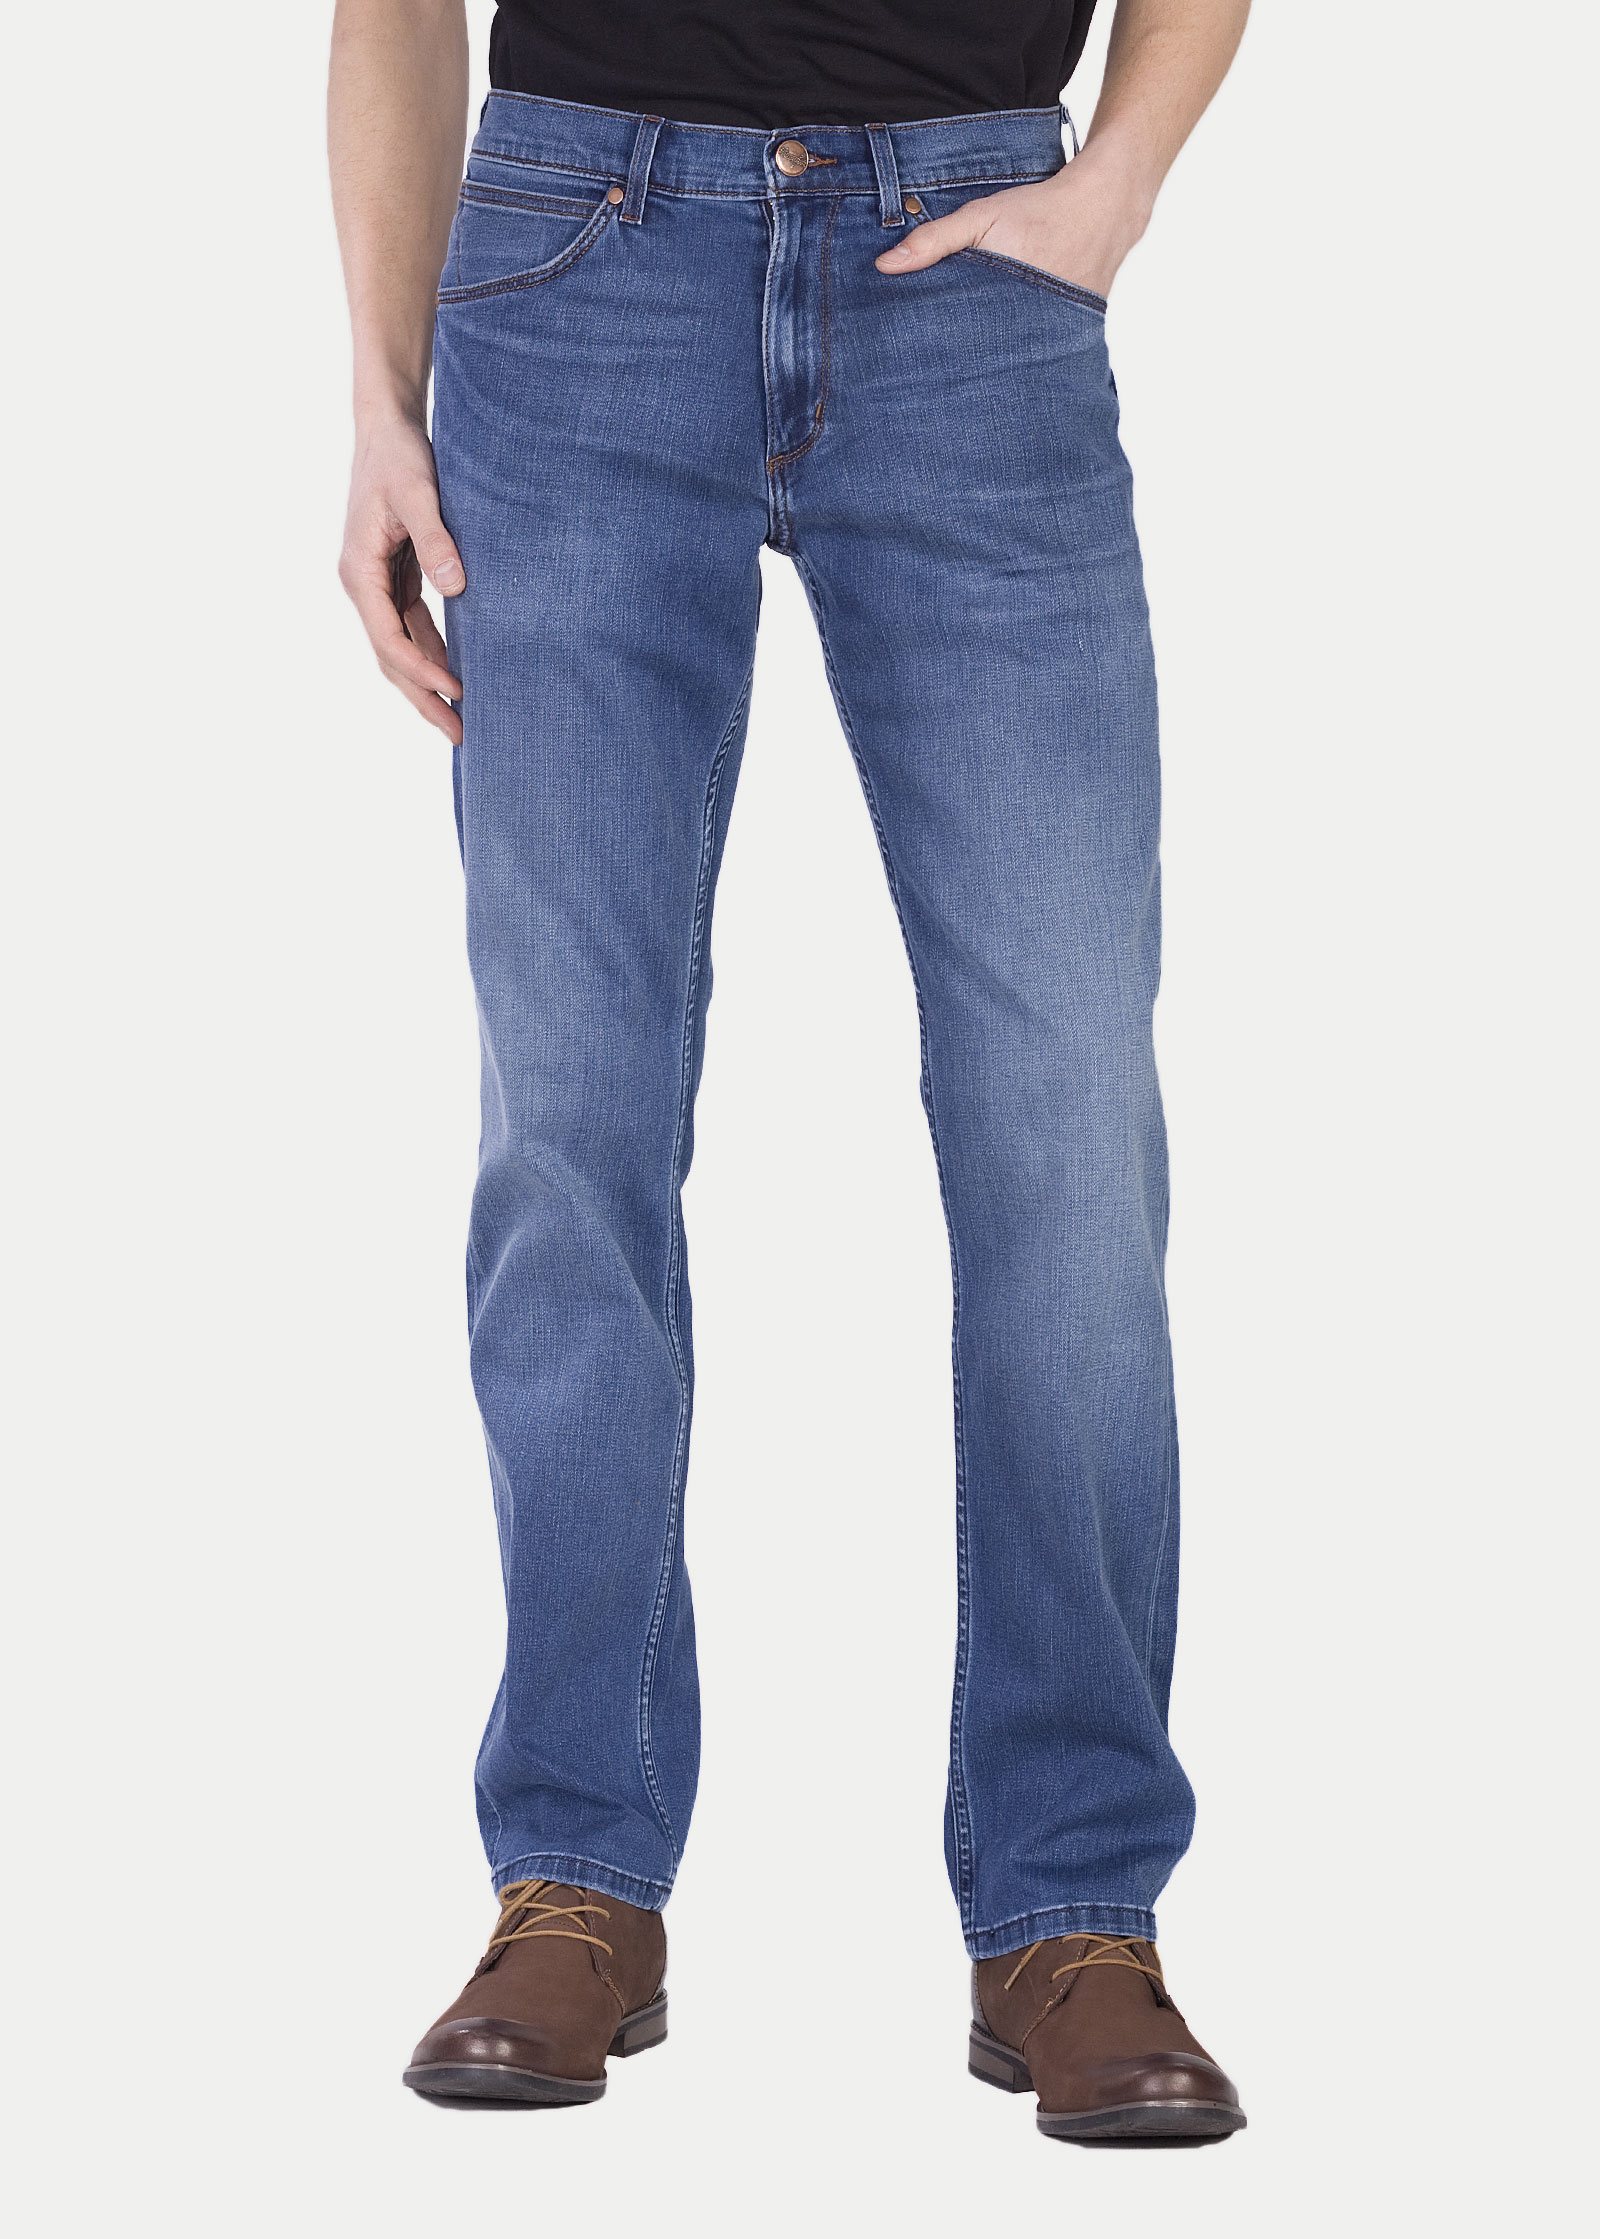 фото Джинсы мужские wrangler men greensboro jeans синие 34/36